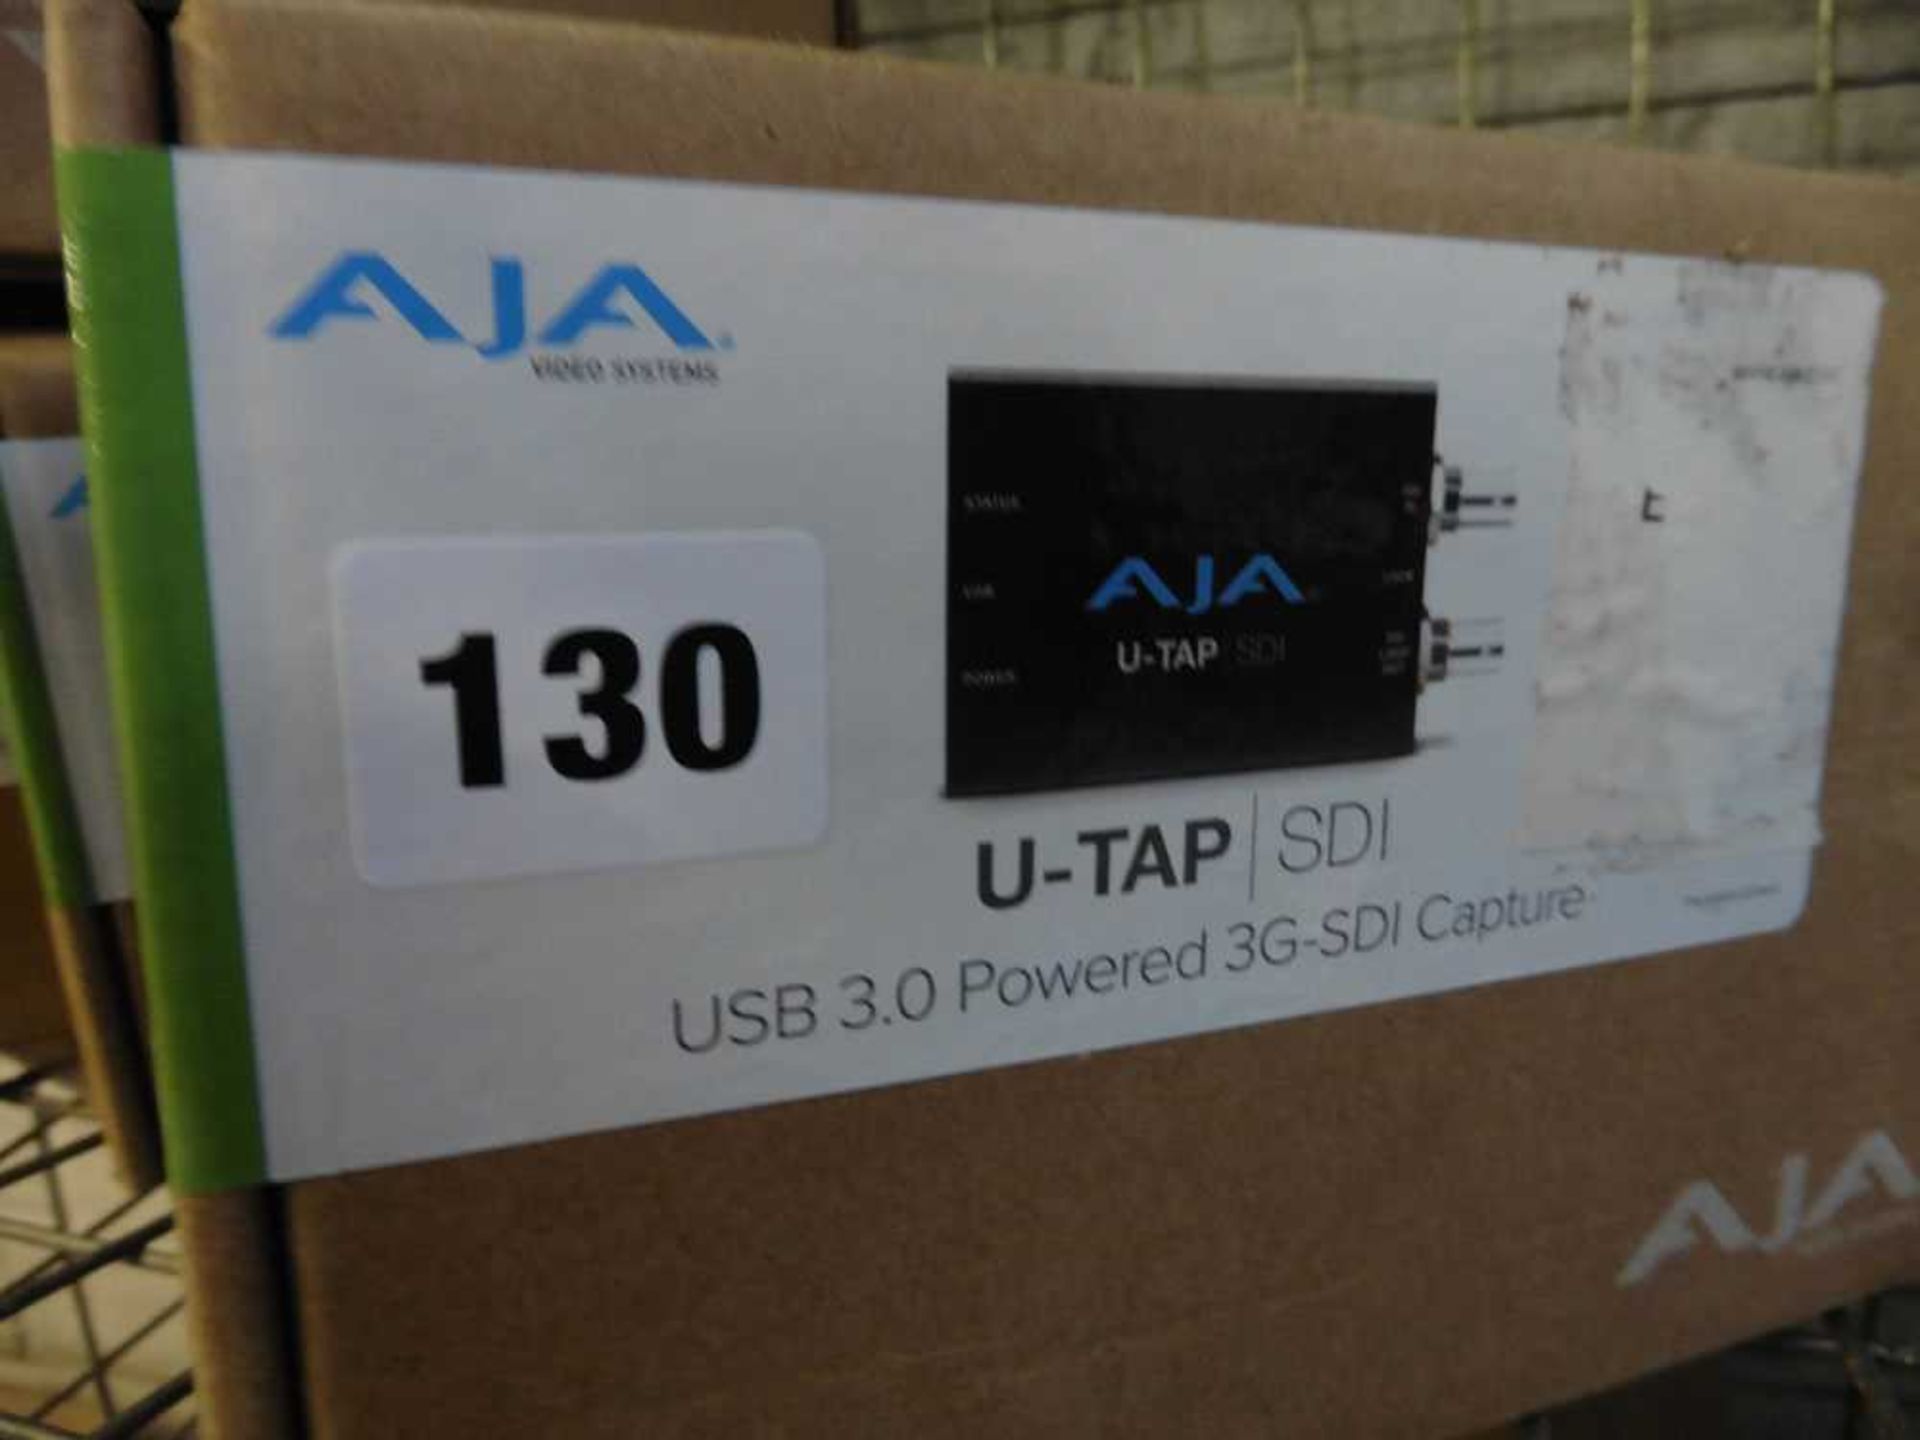 +VAT AJA video systems U-TAP/SDI USB 3.0 powered 3G-SDI capture device in box